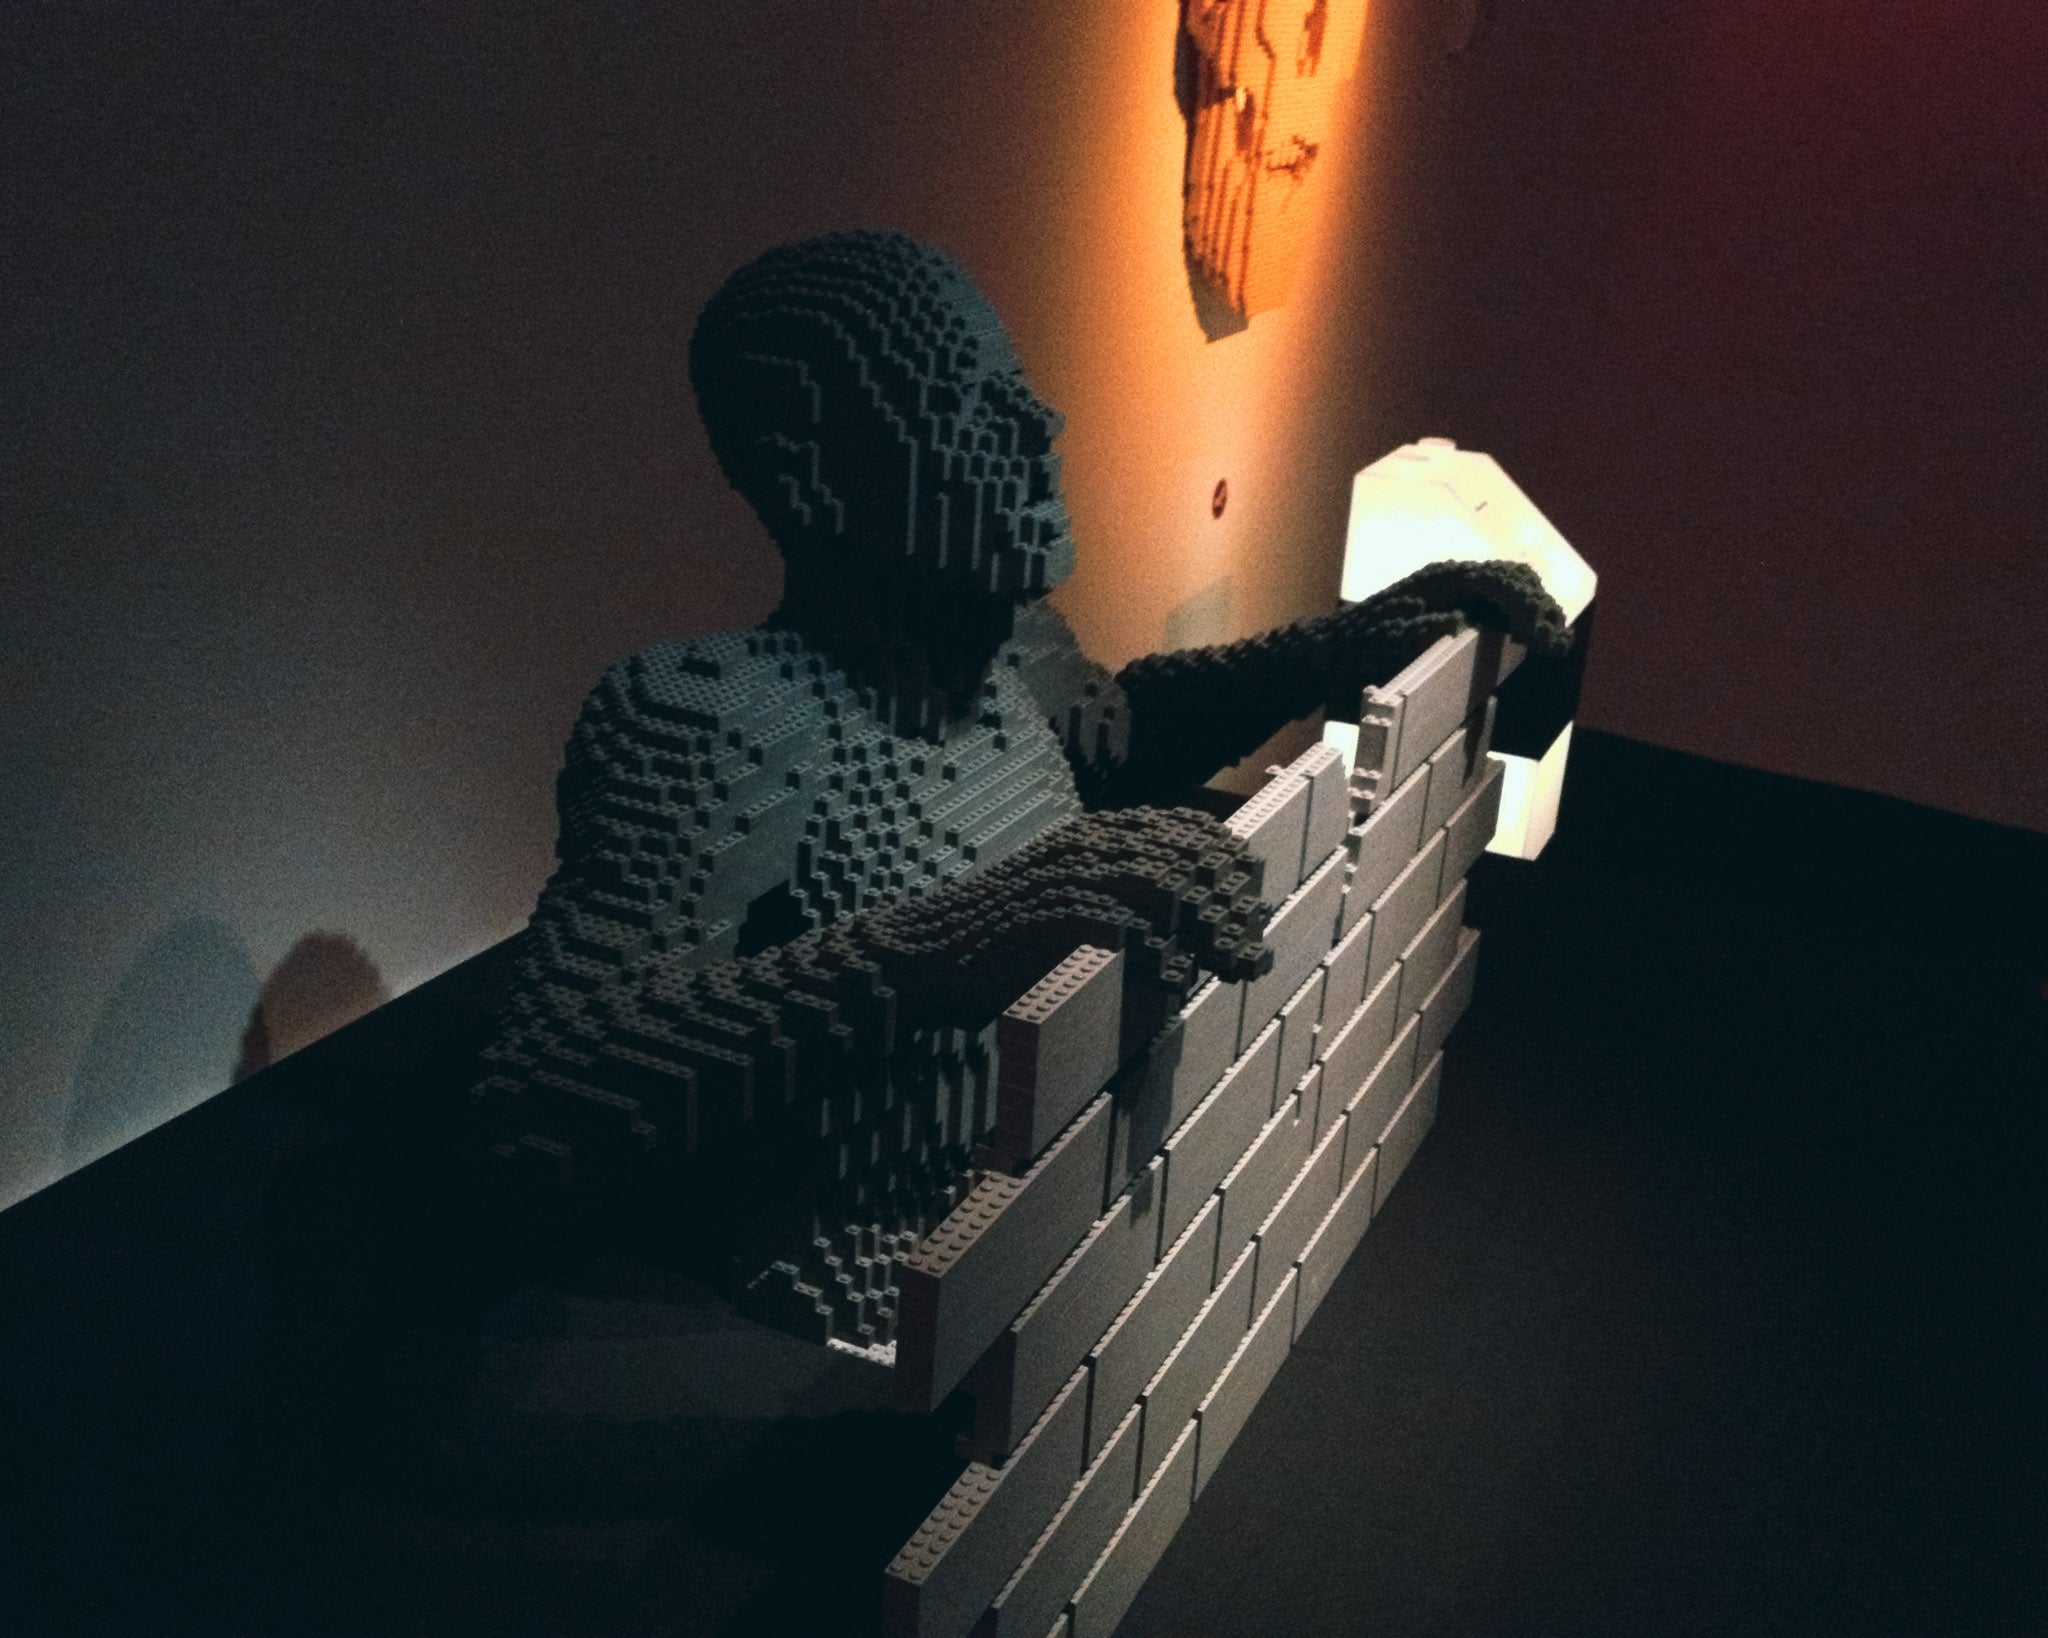 The Art of the Brick, ArtScience Museum Singapore